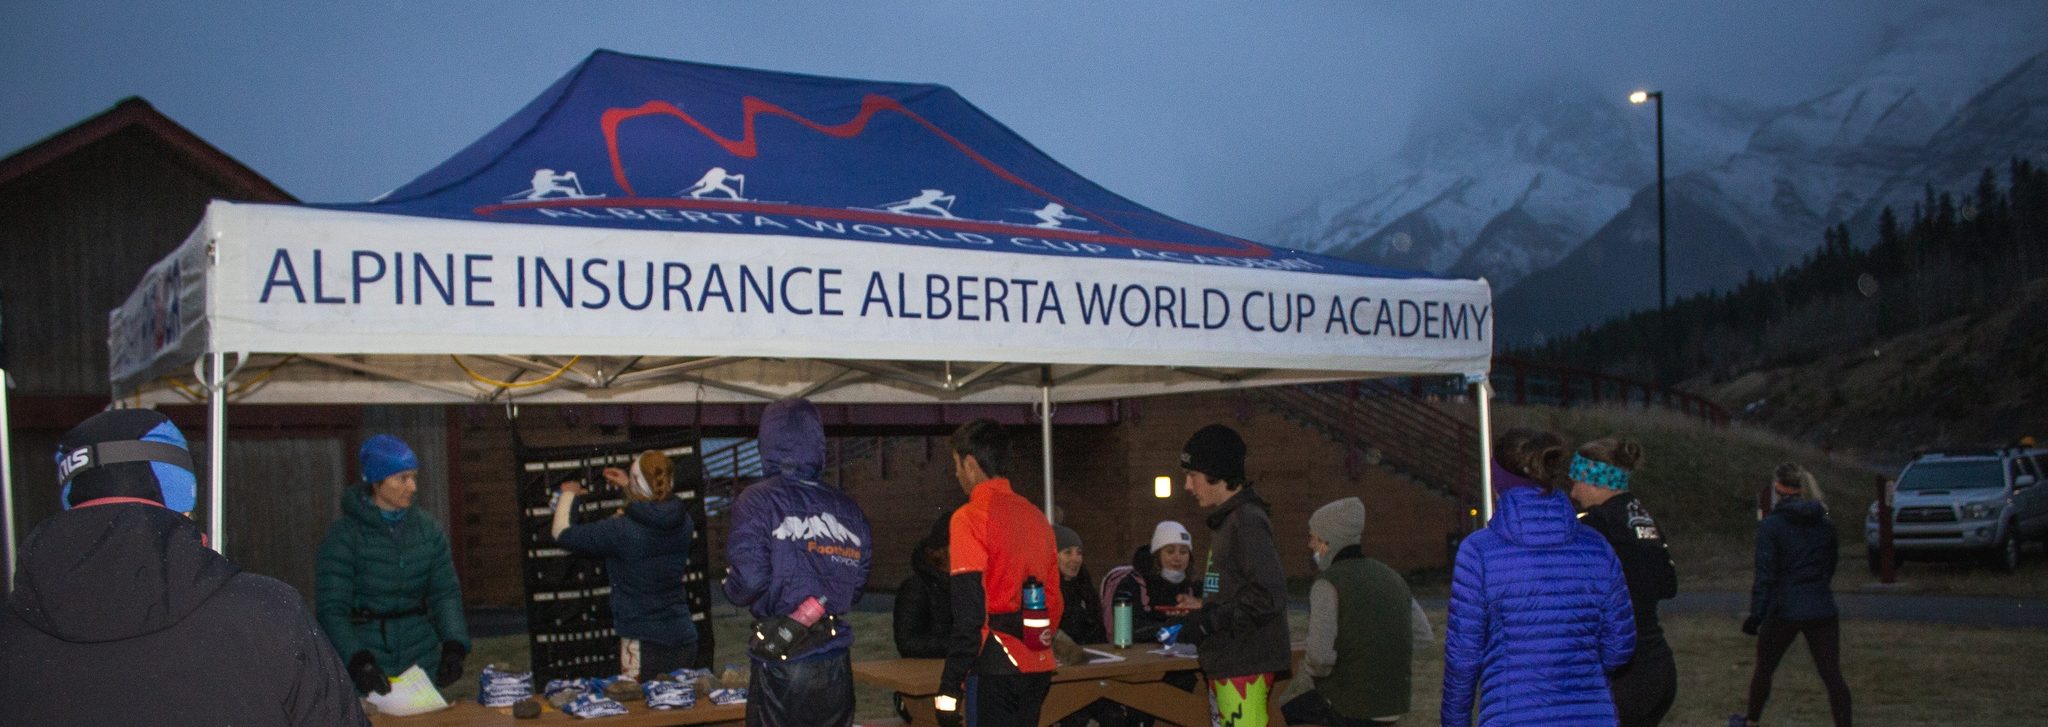 Alberta World Cup Sponsors